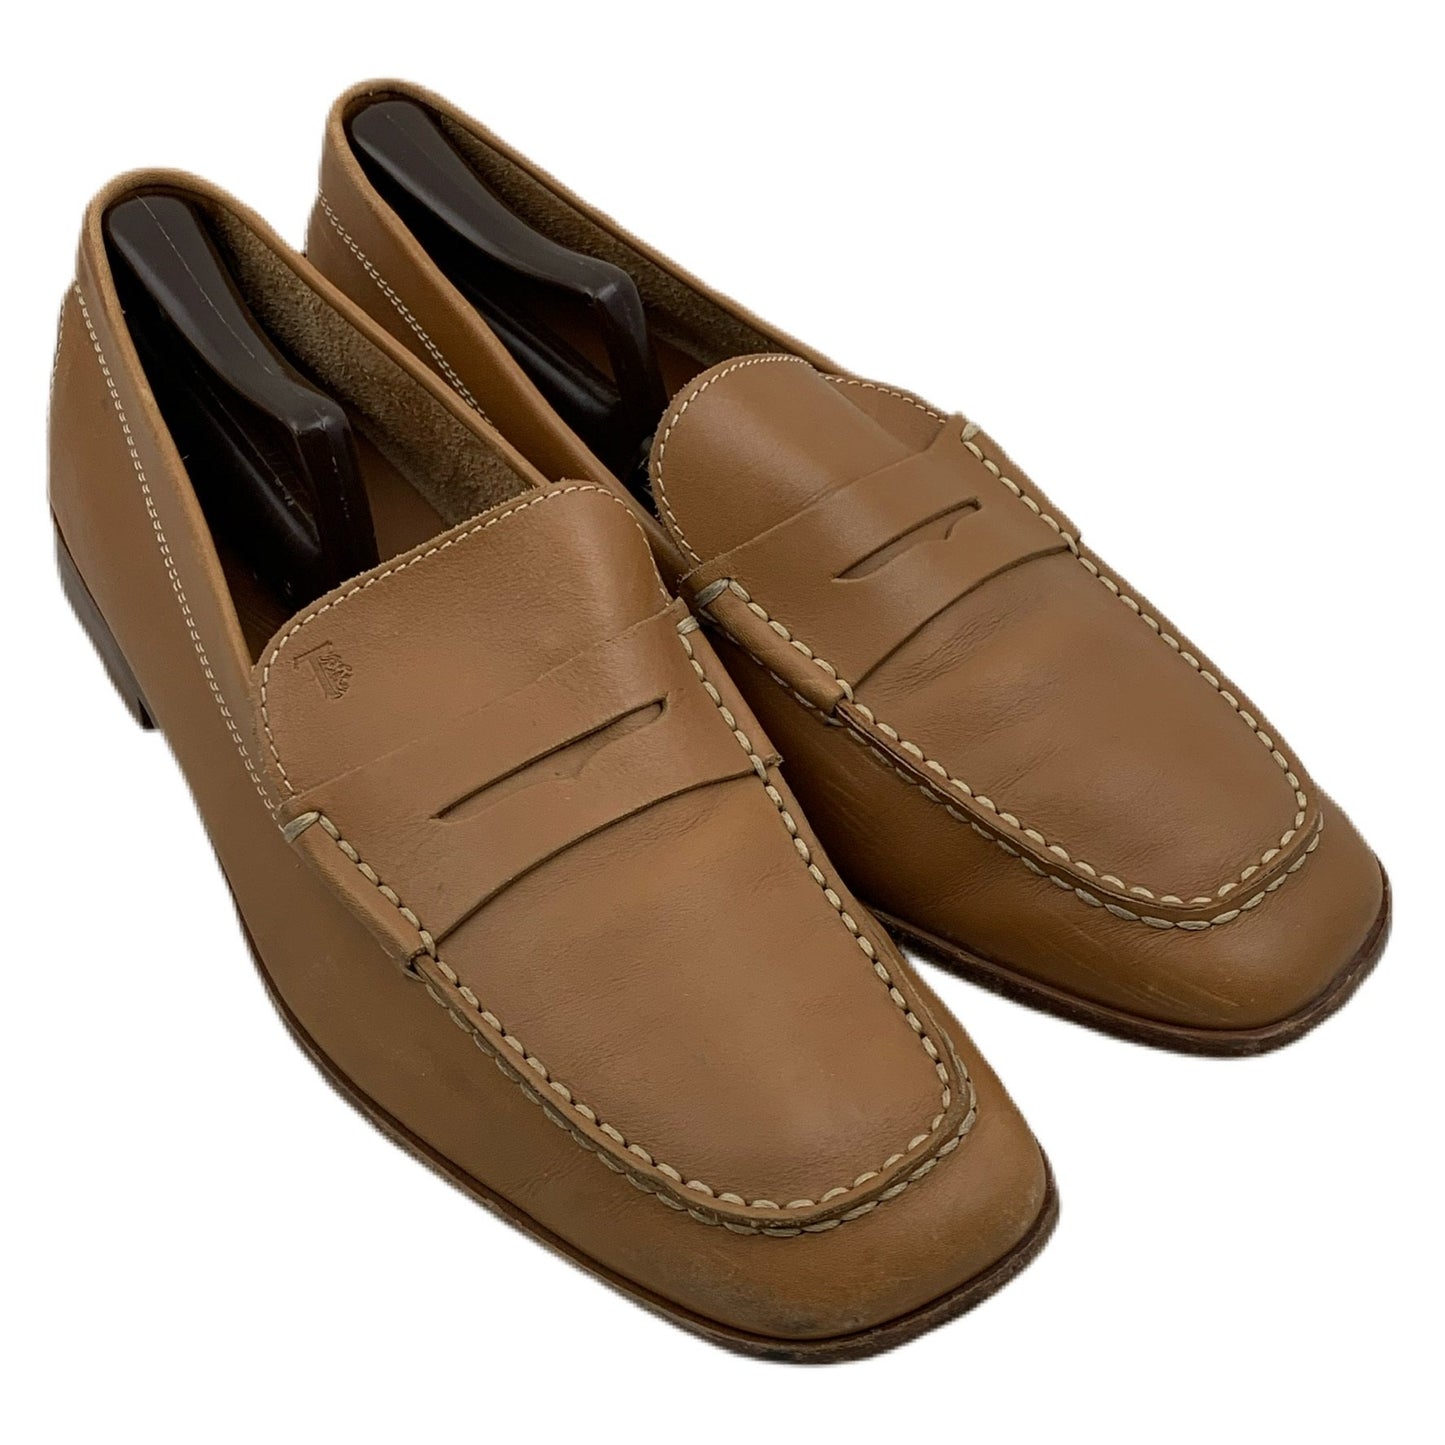 Scarpe Shoes TOD'S mocassino  pelle - 10 UK - Marrone chiaro  beige